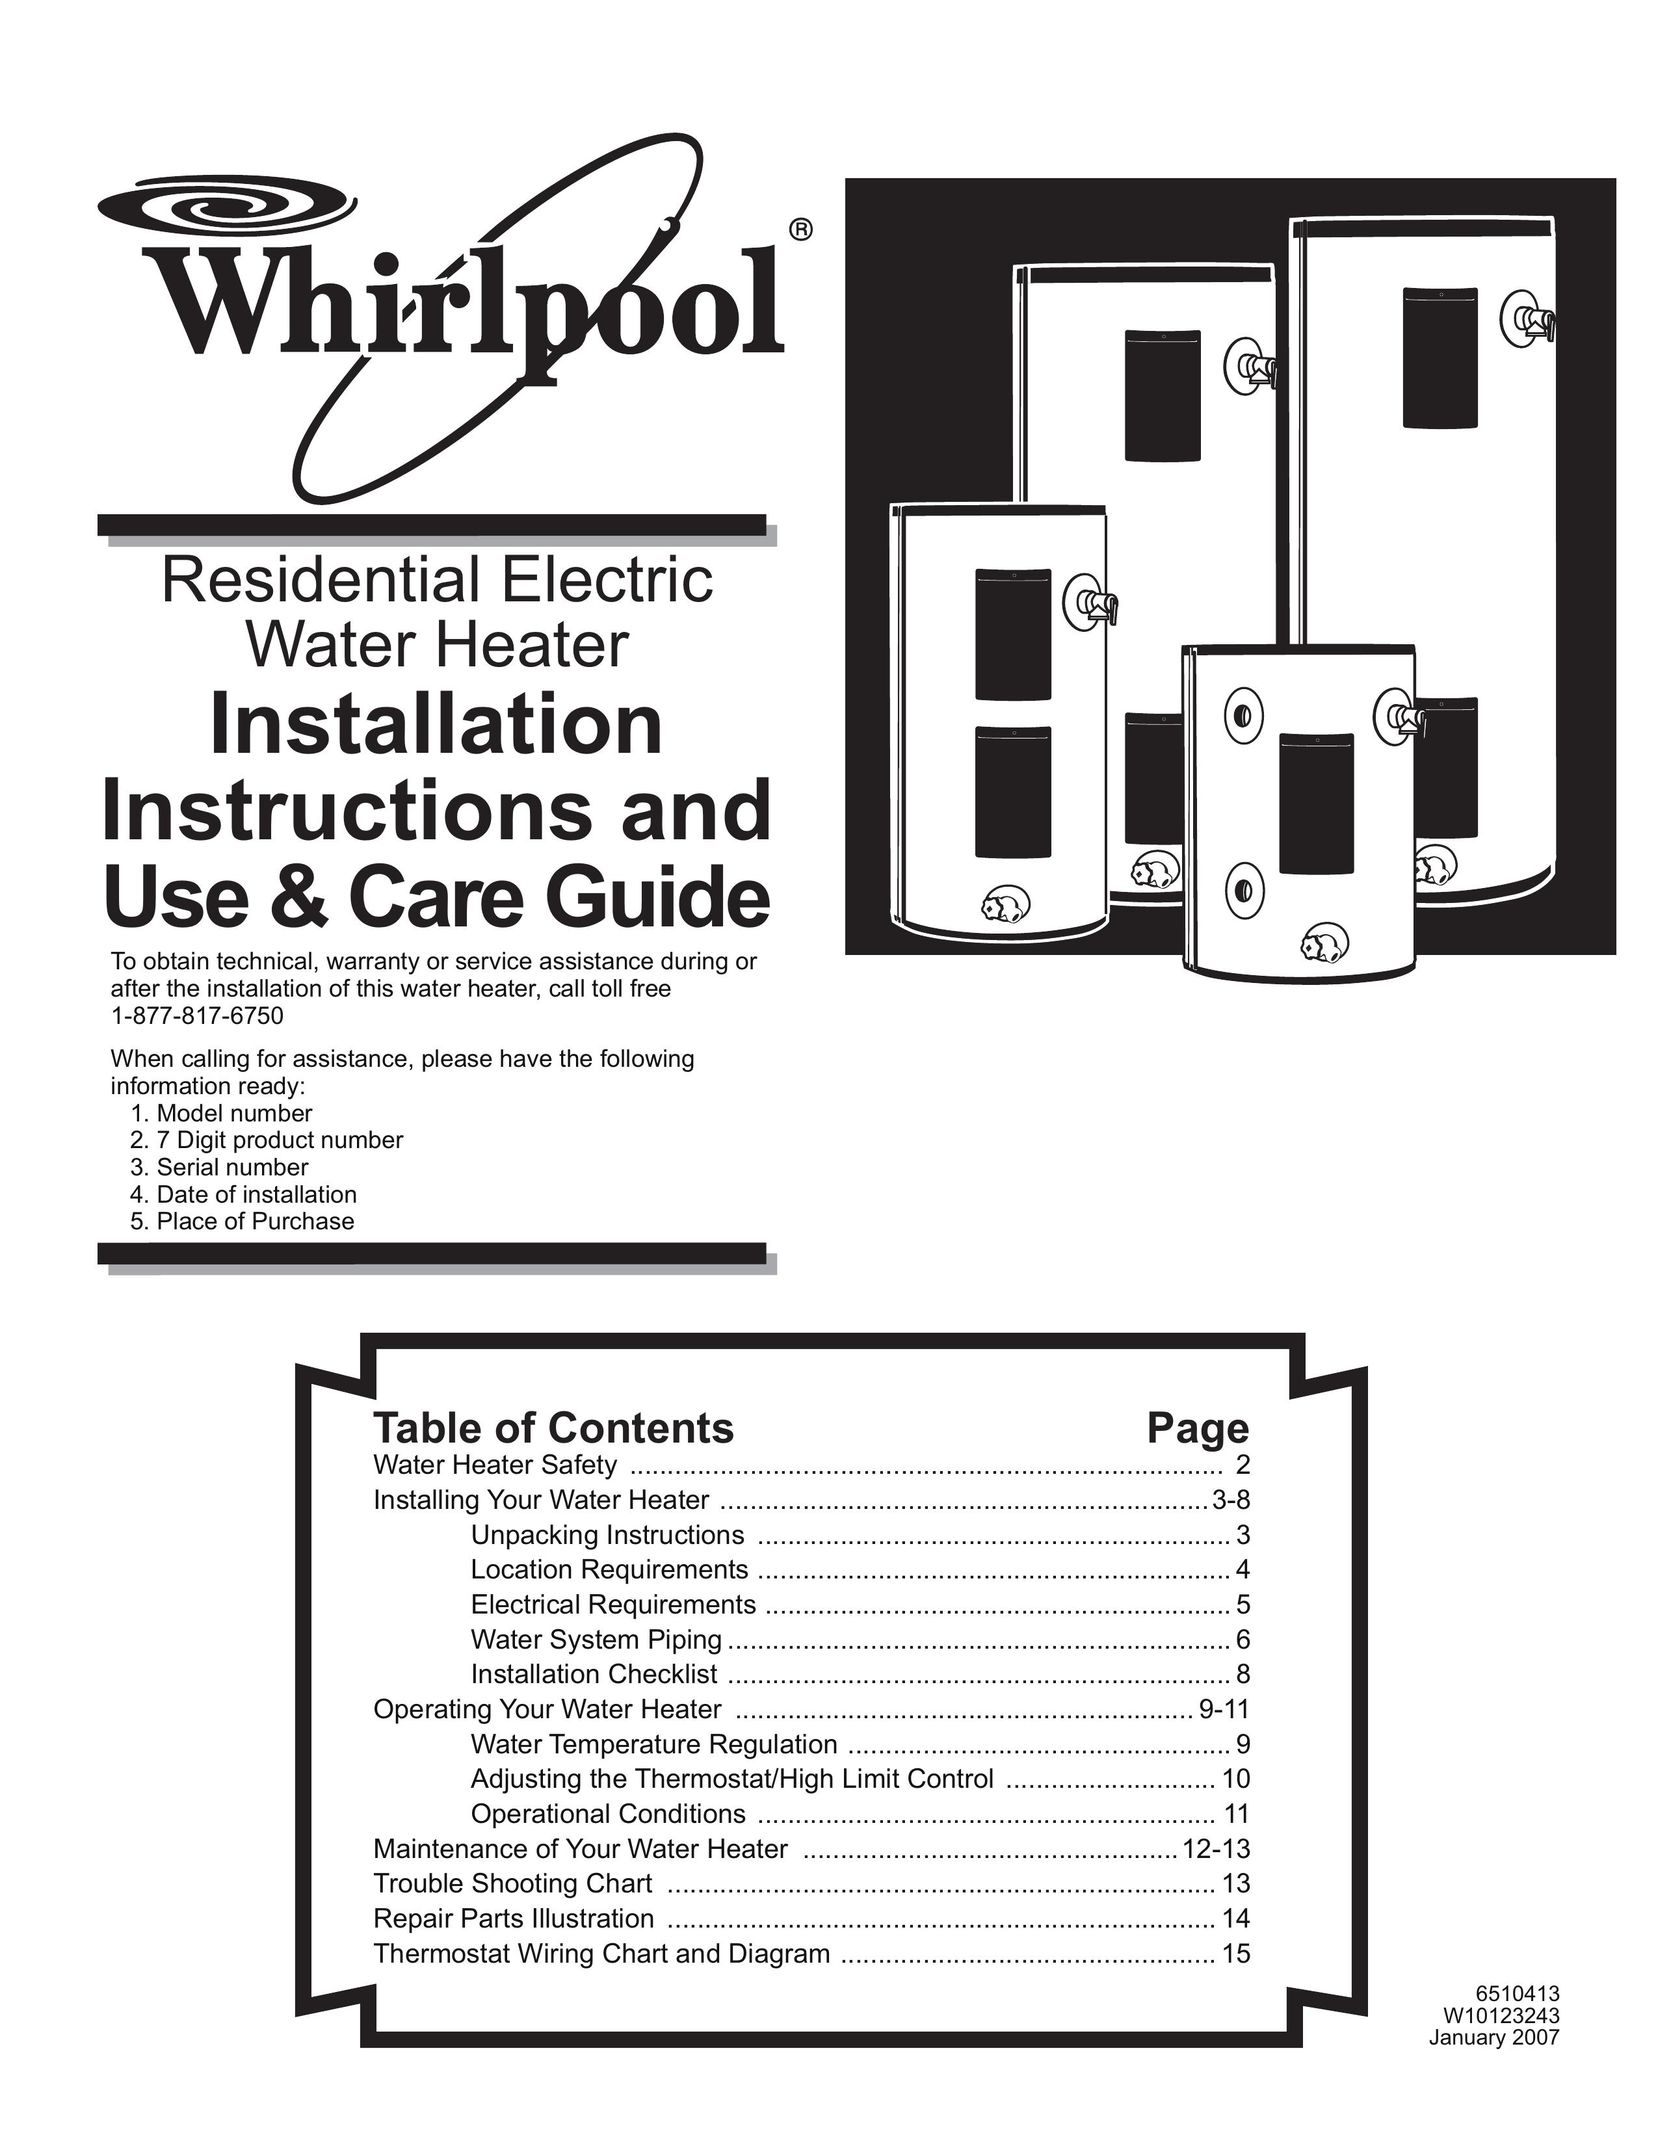 Whirlpool 140378 Water Heater User Manual